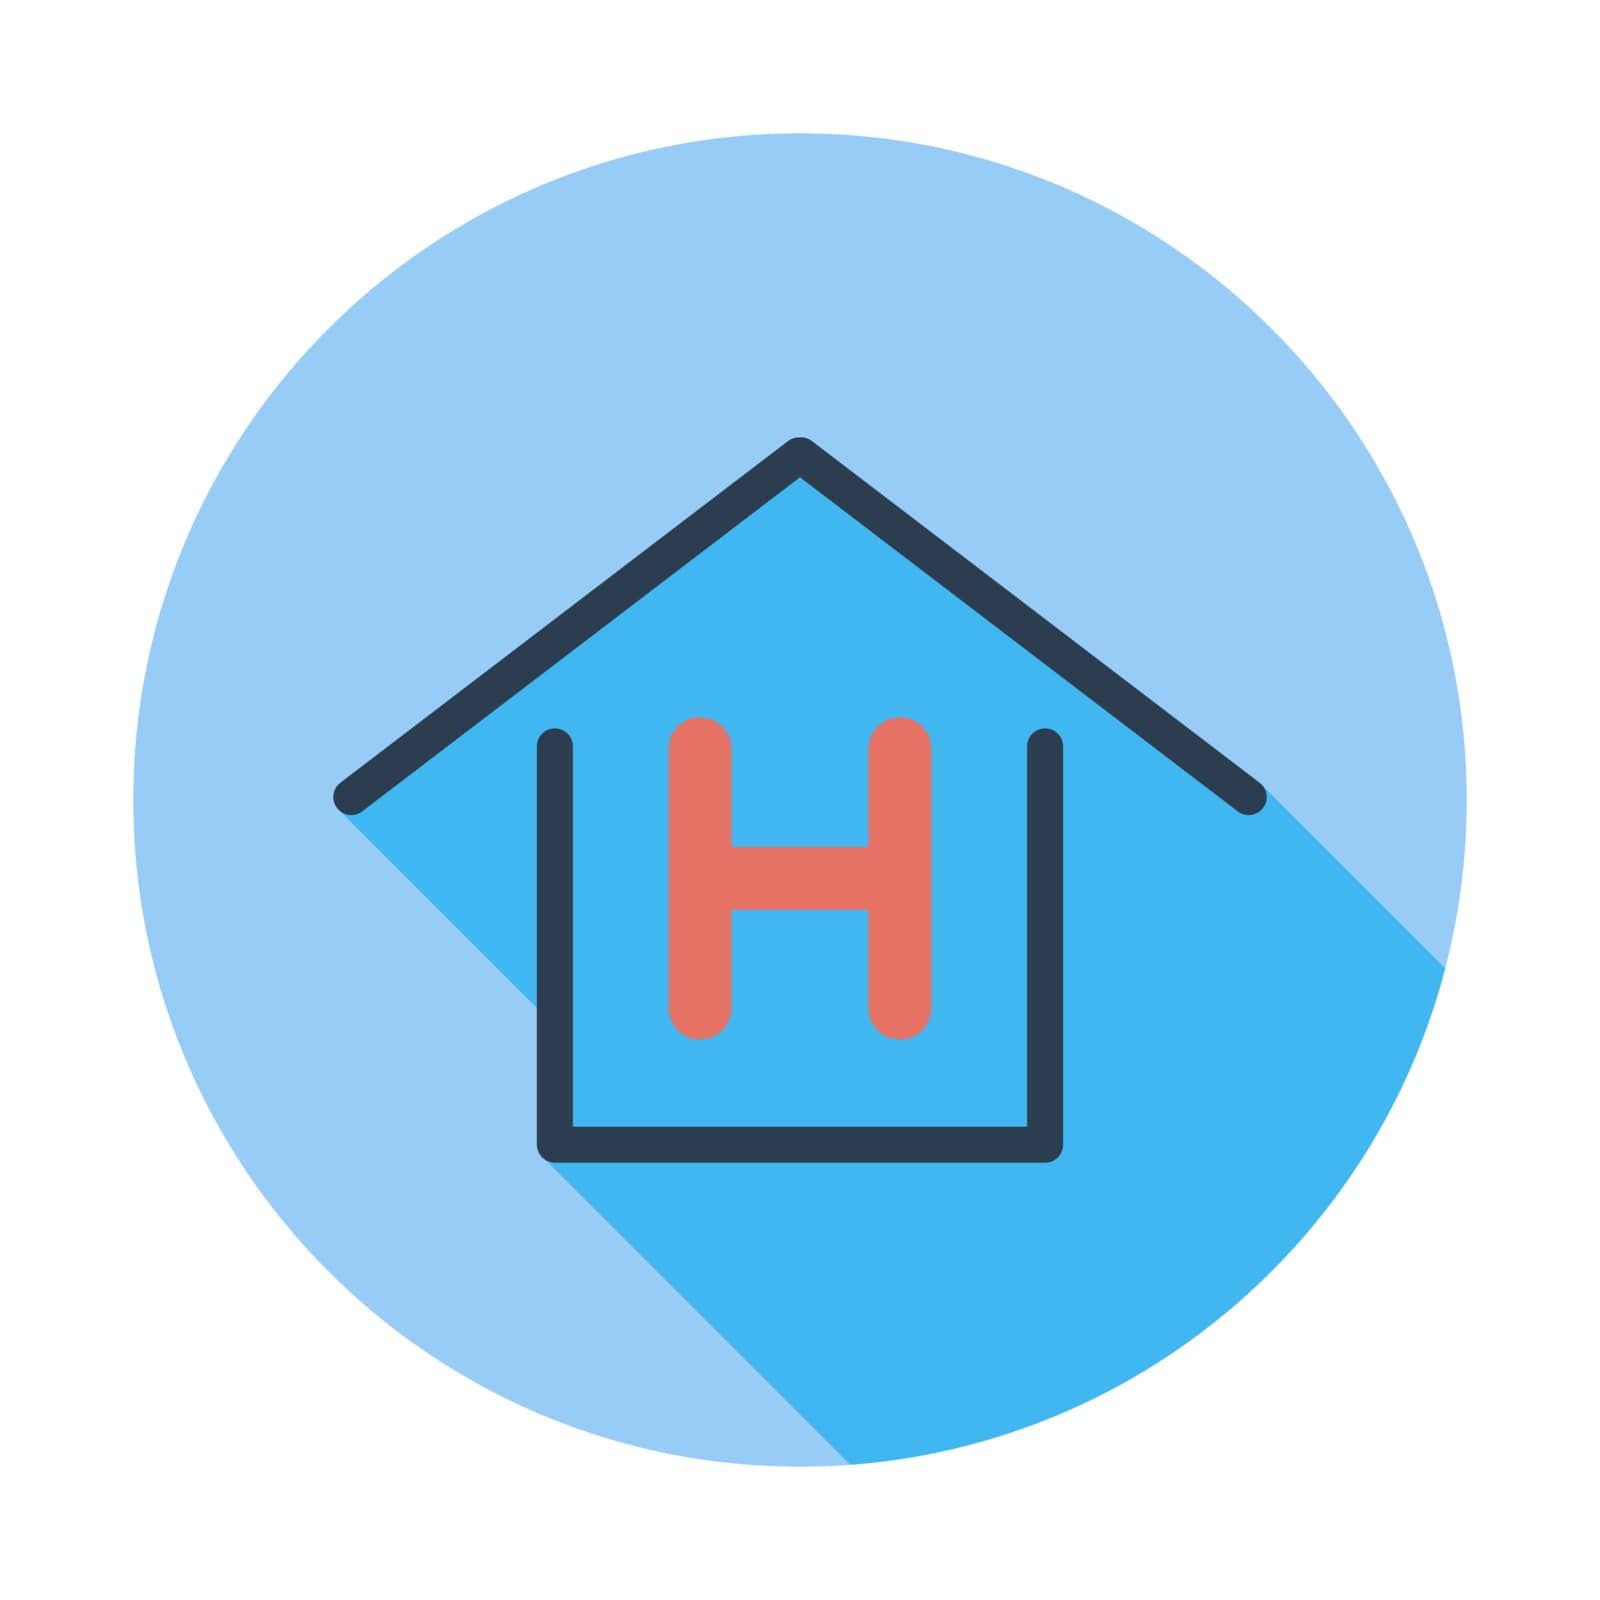 Hostel. Single flat color icon. Vector illustration.